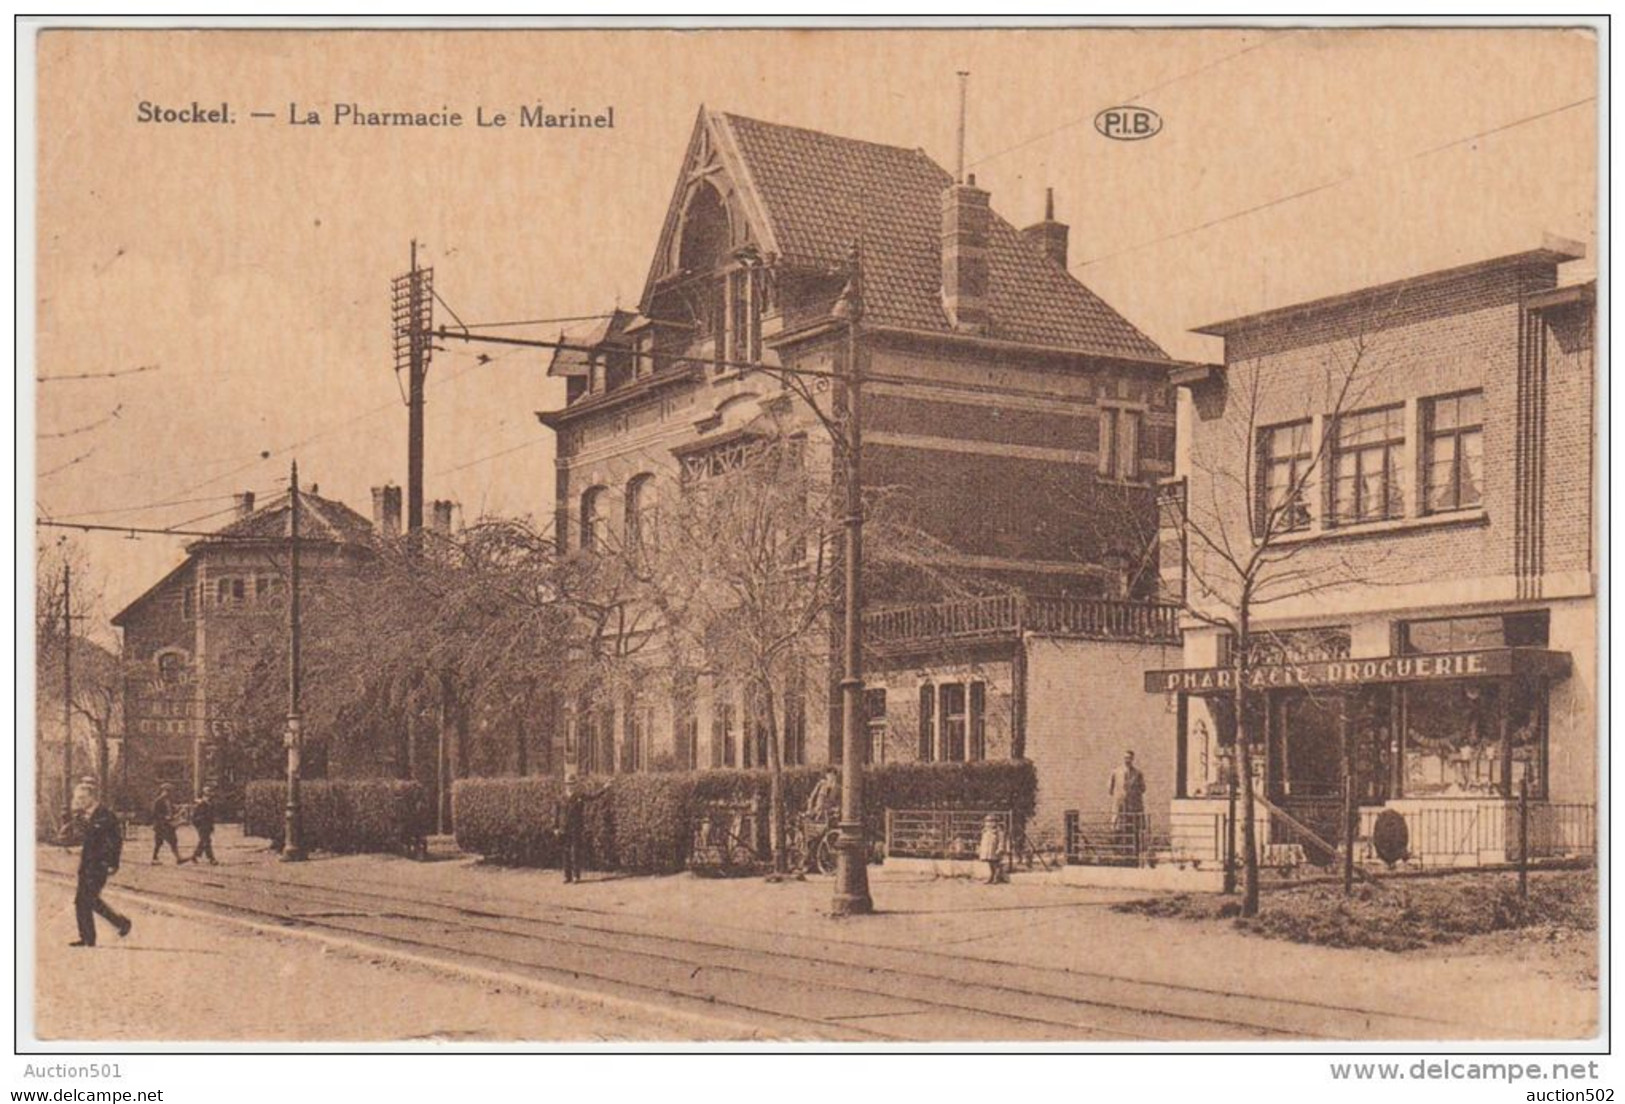 19527g PHARMACIE Le Marinel - Stockel - Rail - Woluwe-St-Pierre - St-Pieters-Woluwe